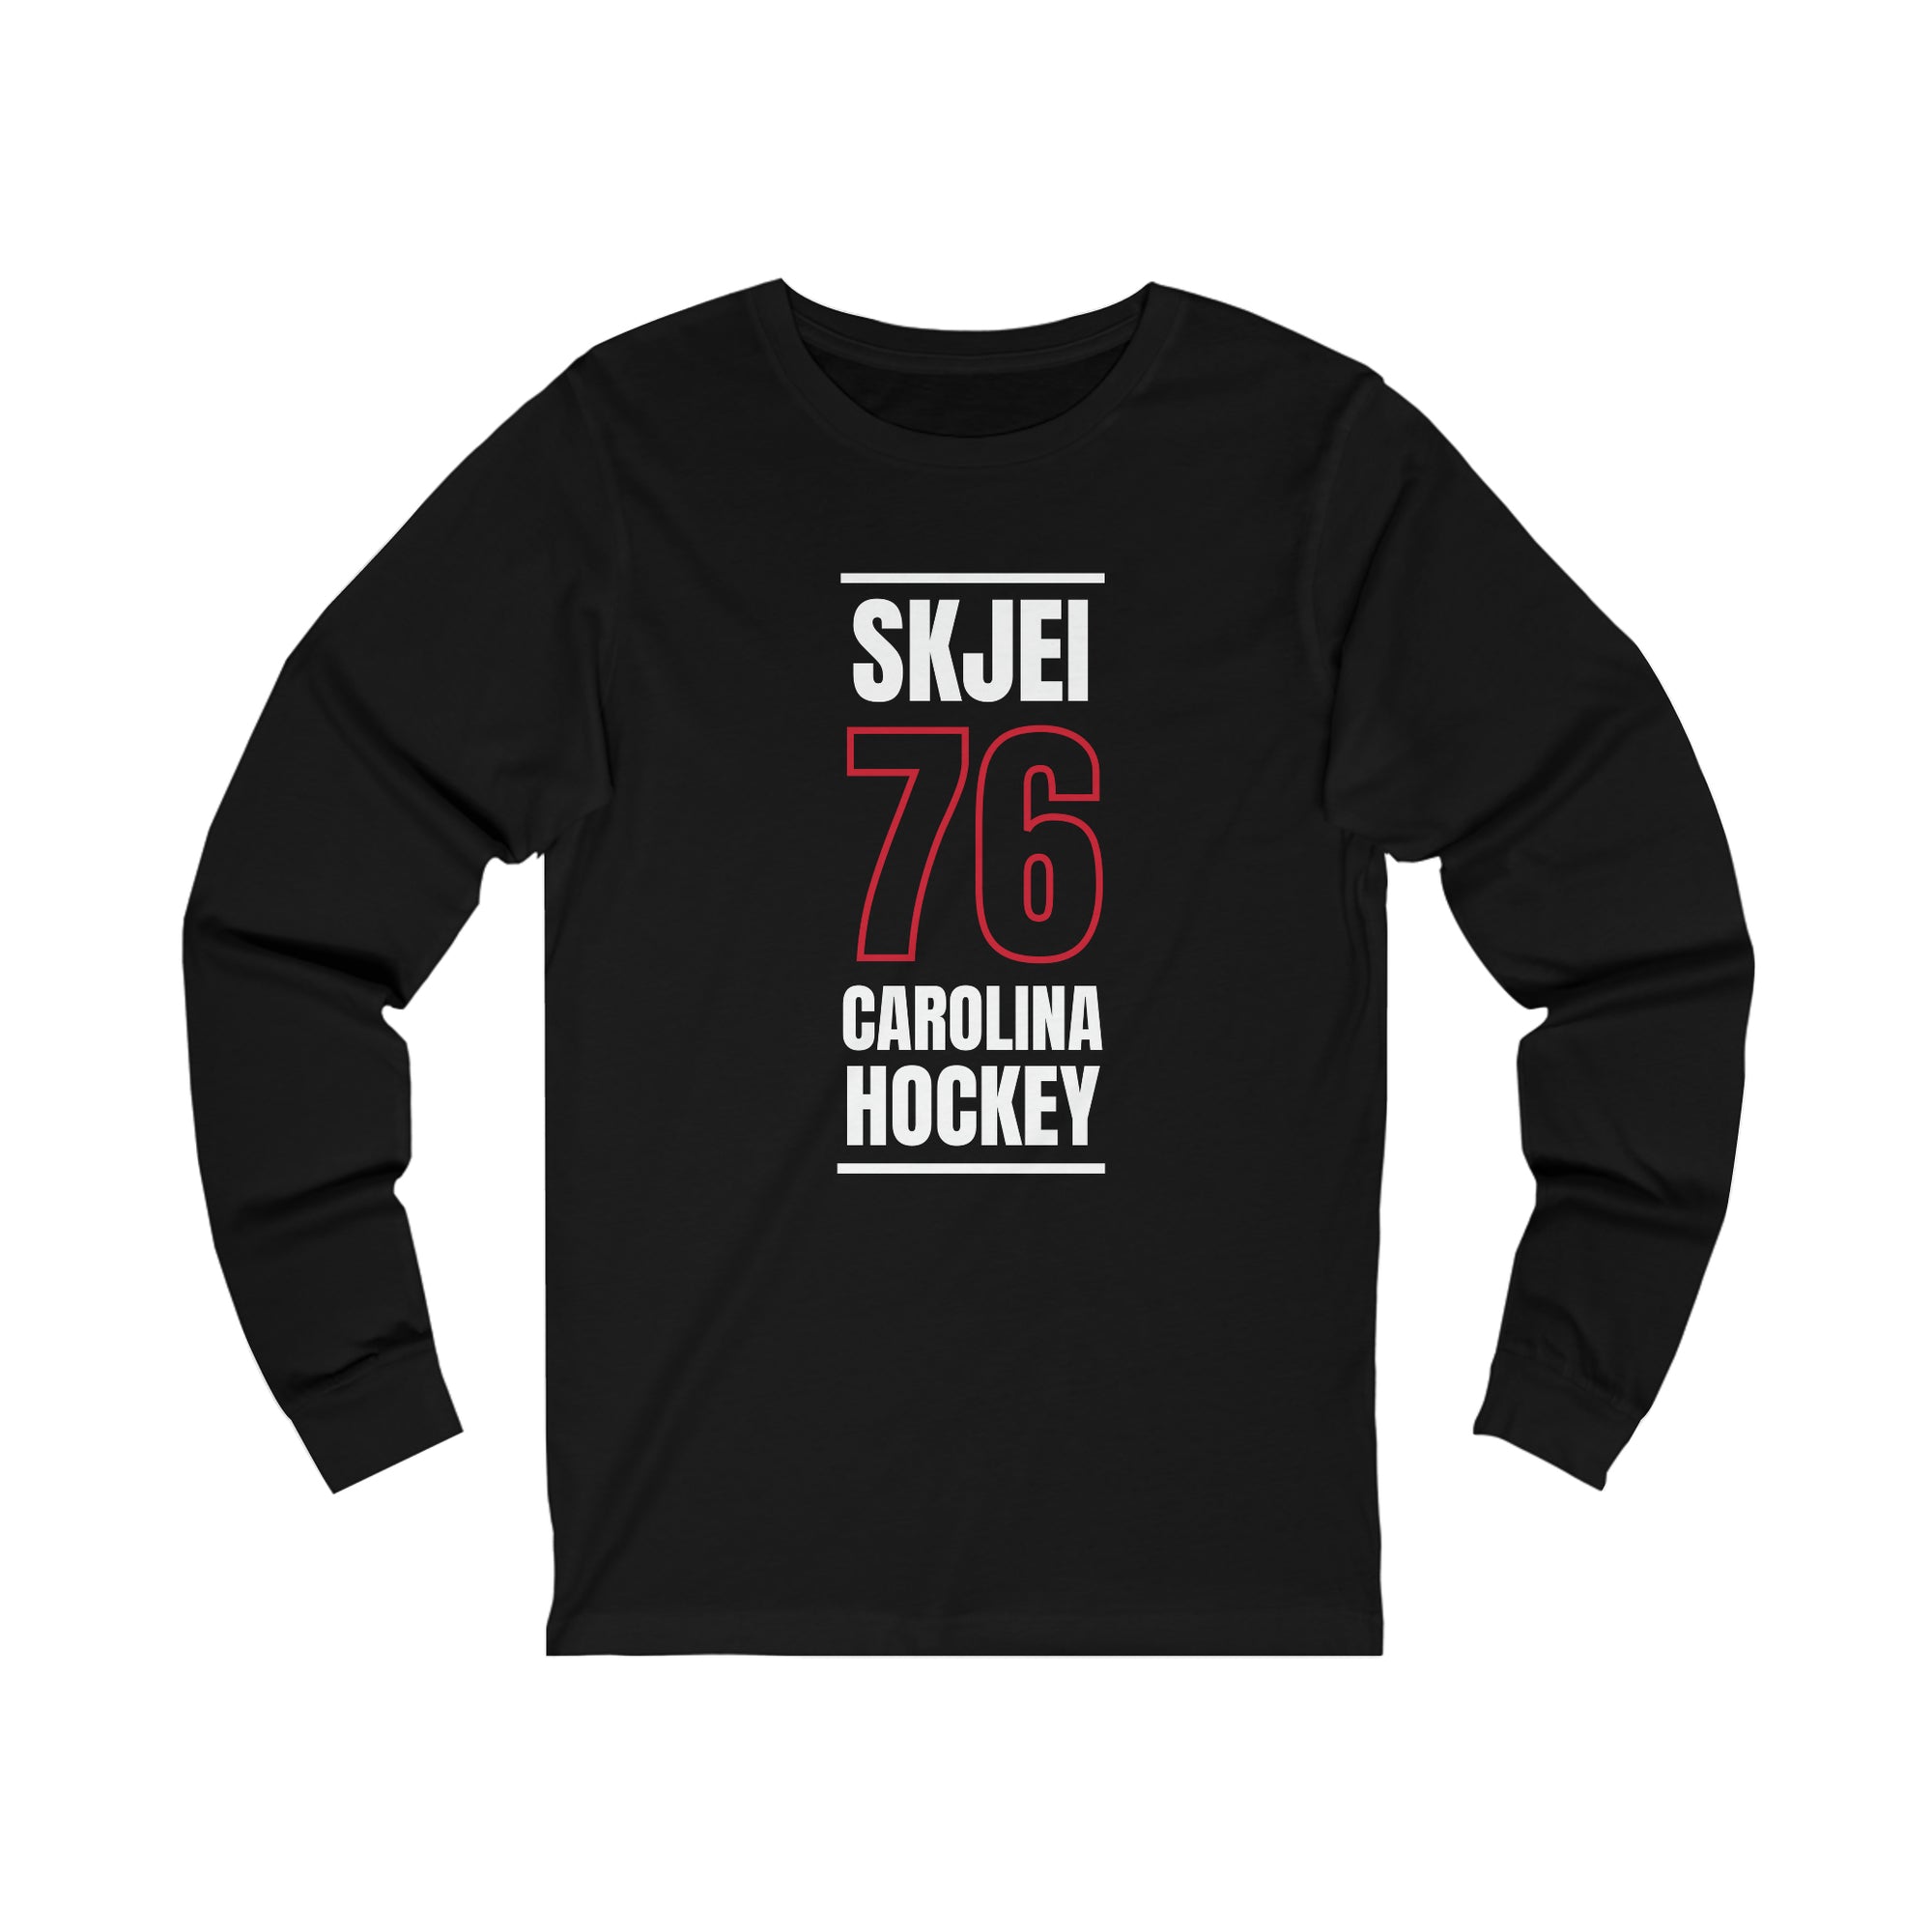 Skjei 76 Carolina Hockey Black Vertical Design Unisex Jersey Long Sleeve Shirt